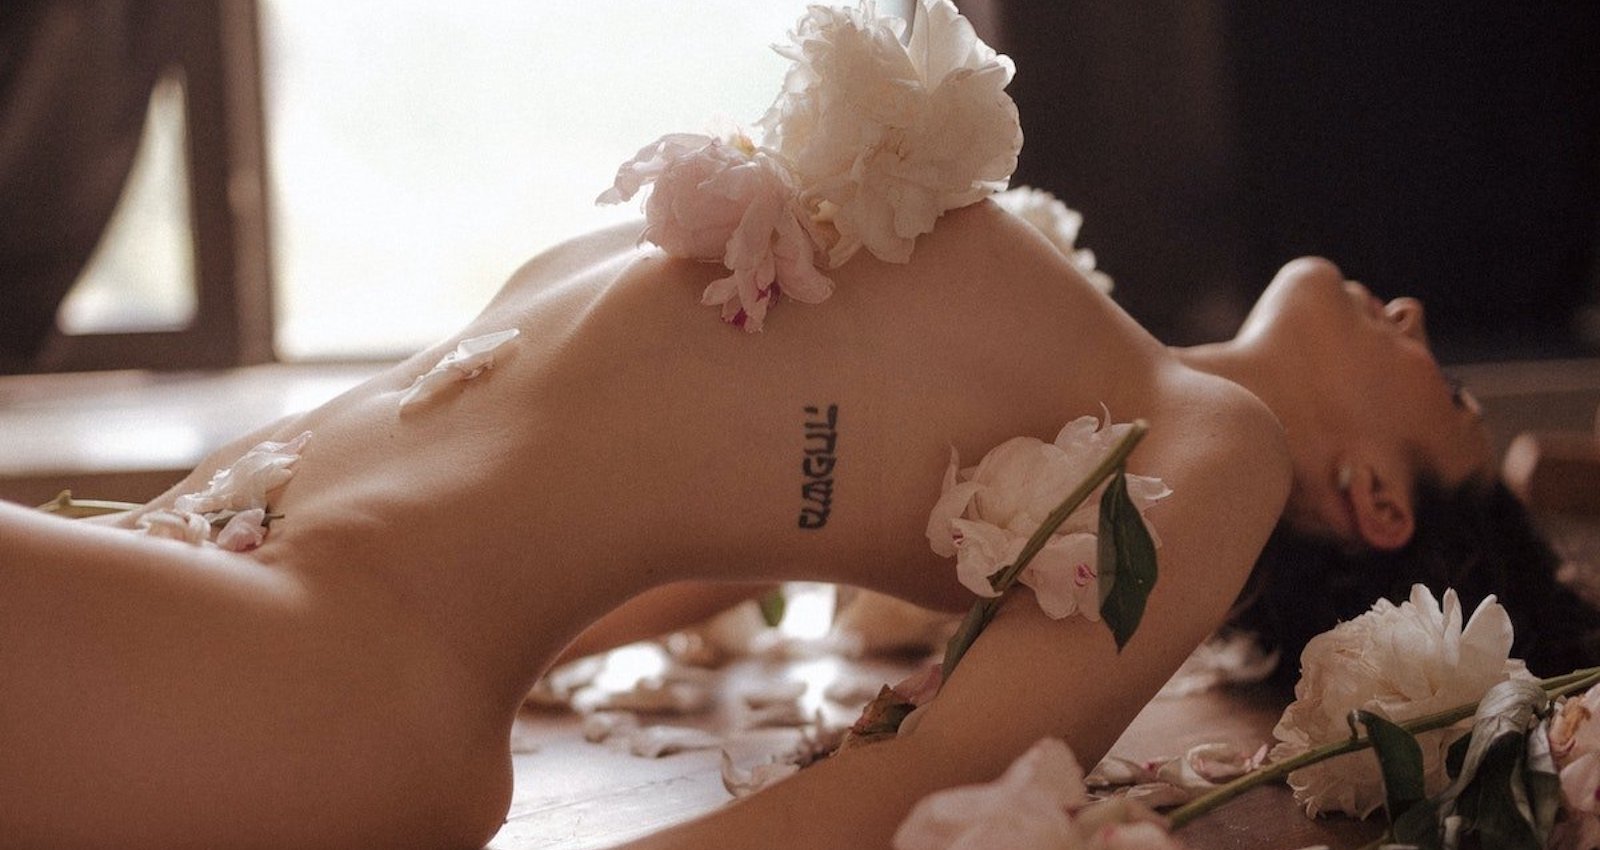 Marina Ryazantseva/Pexels https://www.pexels.com/photo/person-reclining-with-white-flowers-on-her-body-8672937/